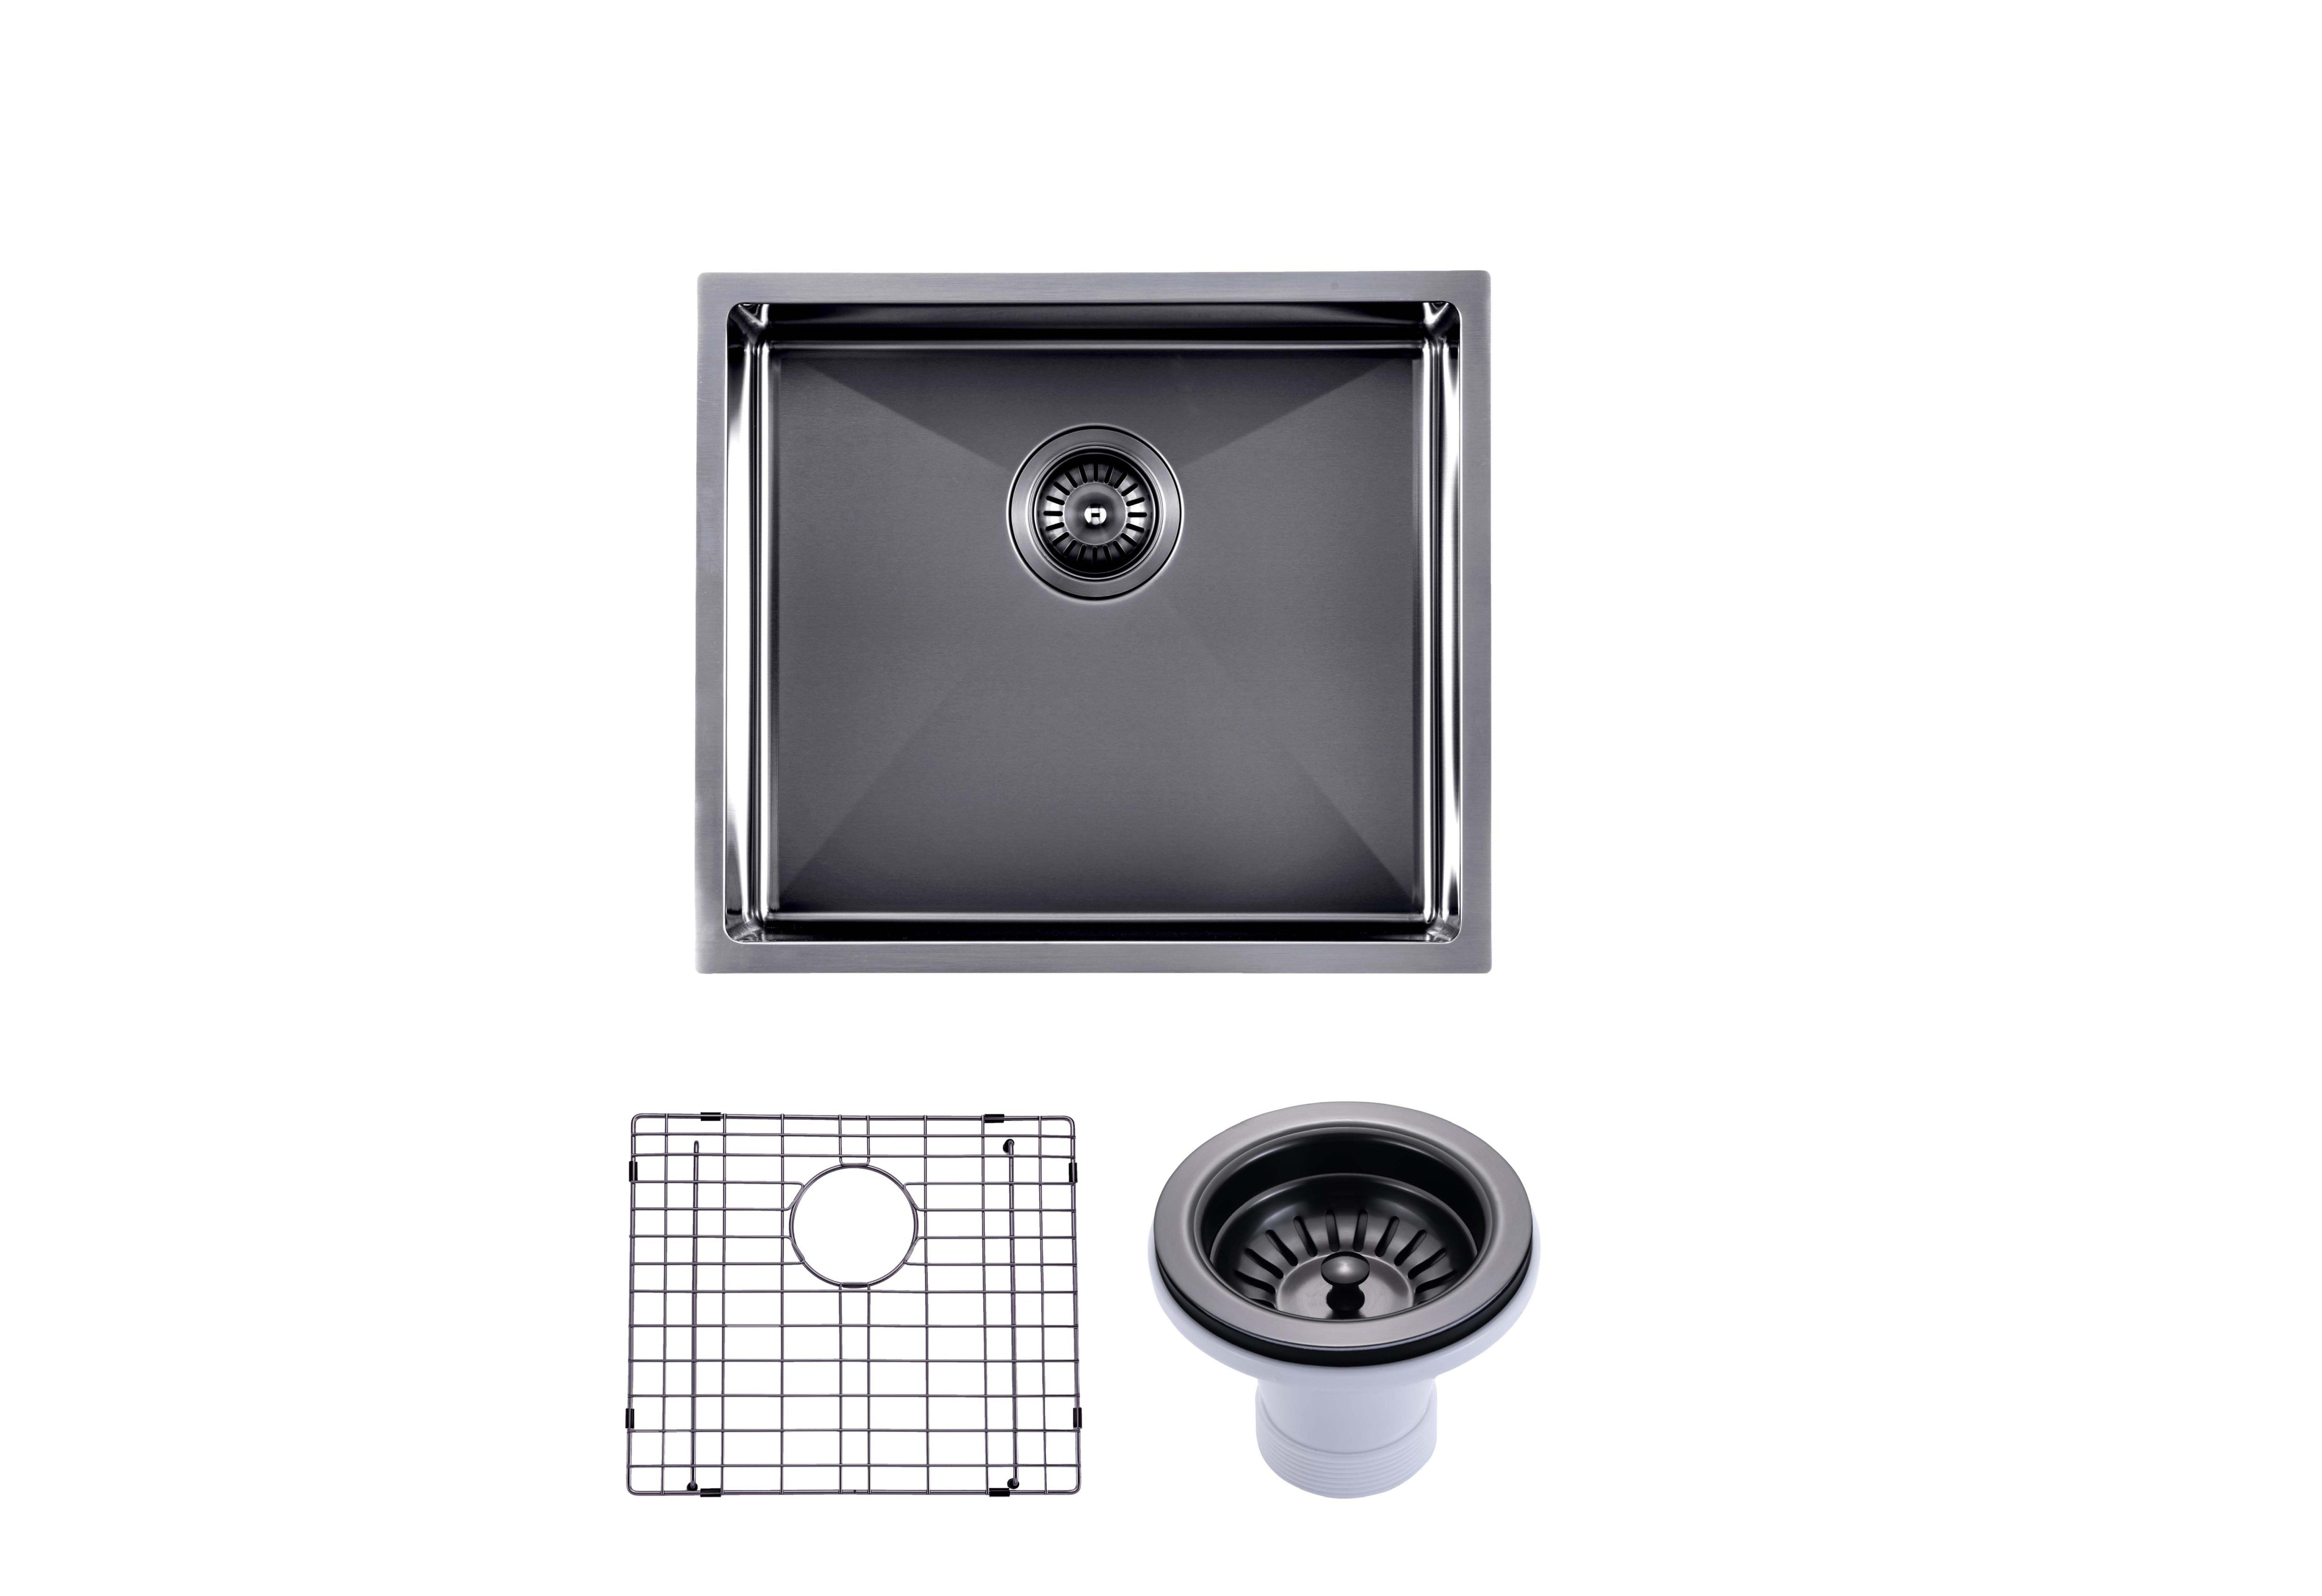 304 Stainless Steel Hand-made Single Bowl Kitchen Sink(Round Edges) 510*450*230mm